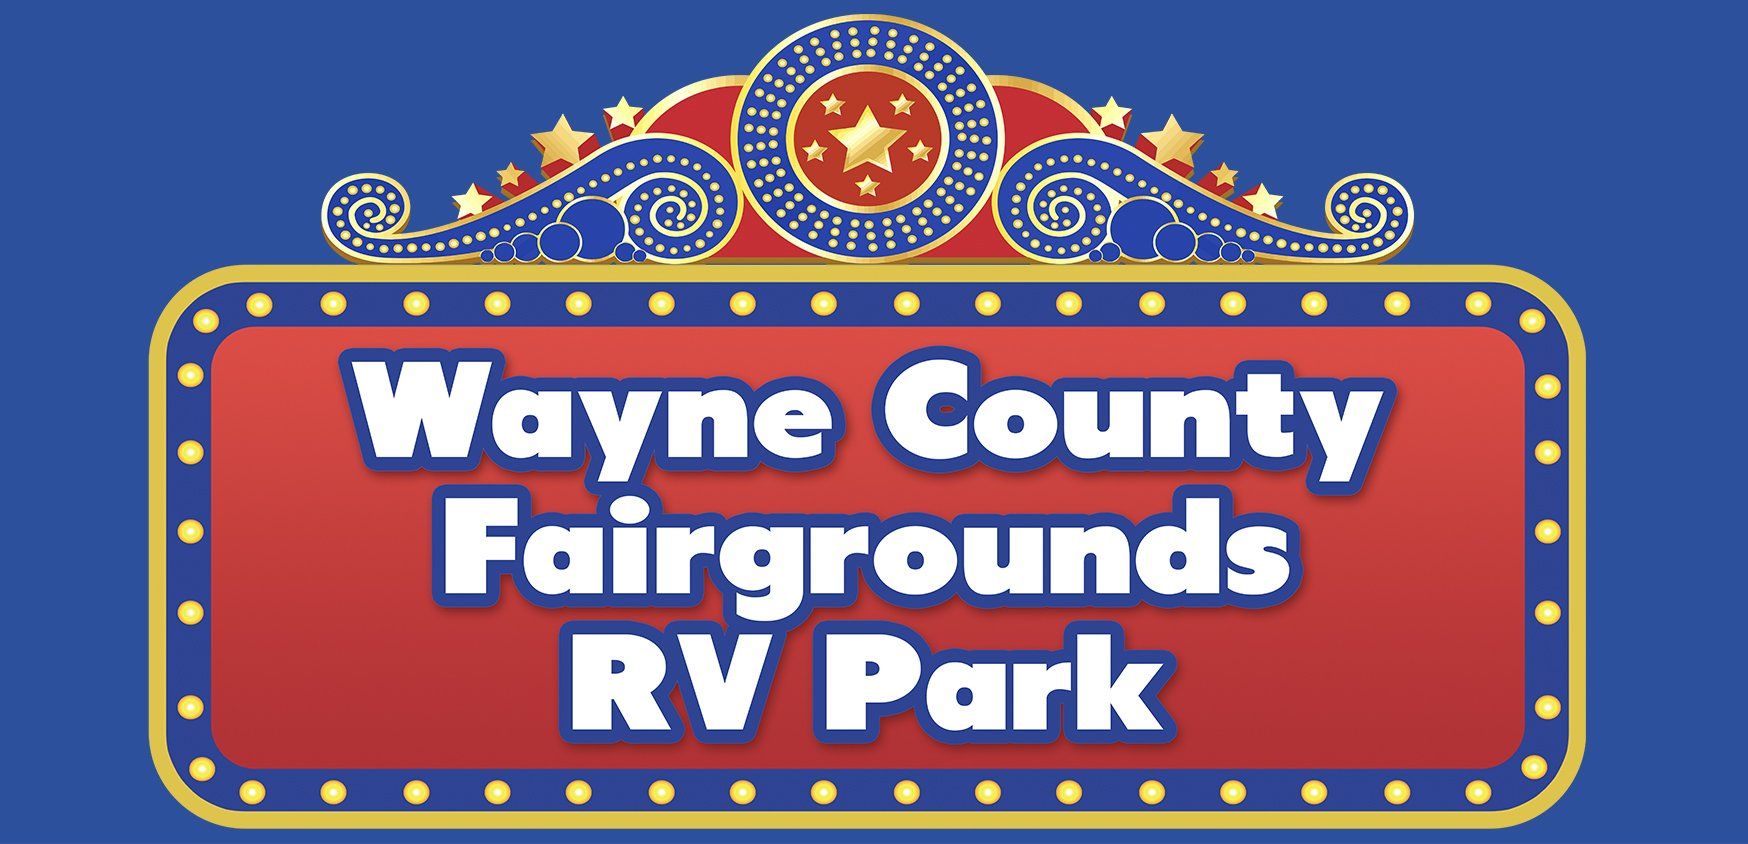 Wayne County Fairgrounds